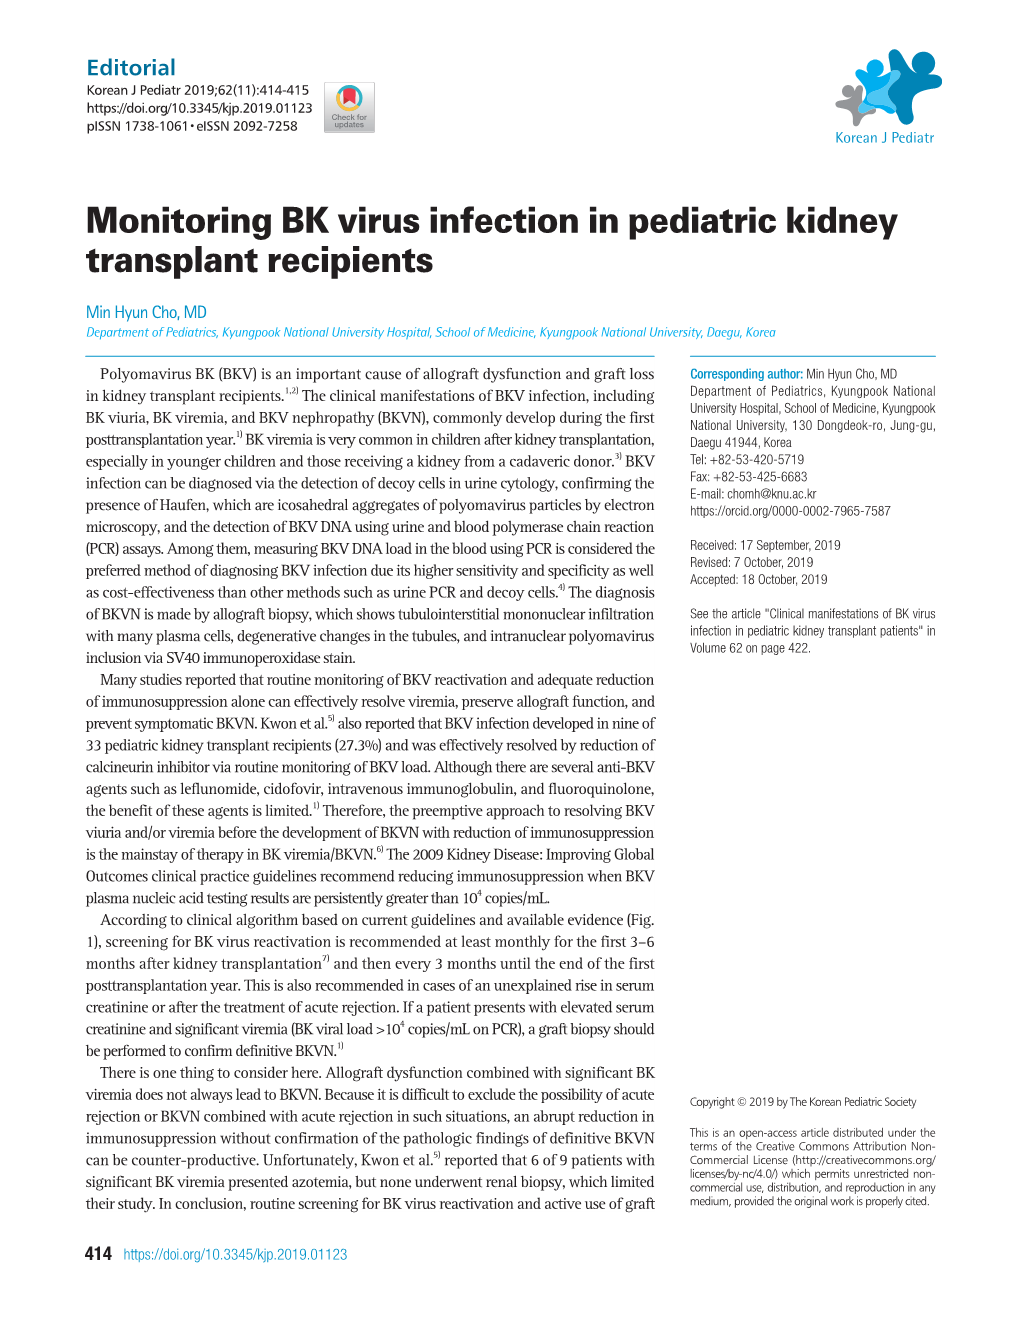 Monitoring BK Virus Infection in Pediatric Kidney Transplant Recipients